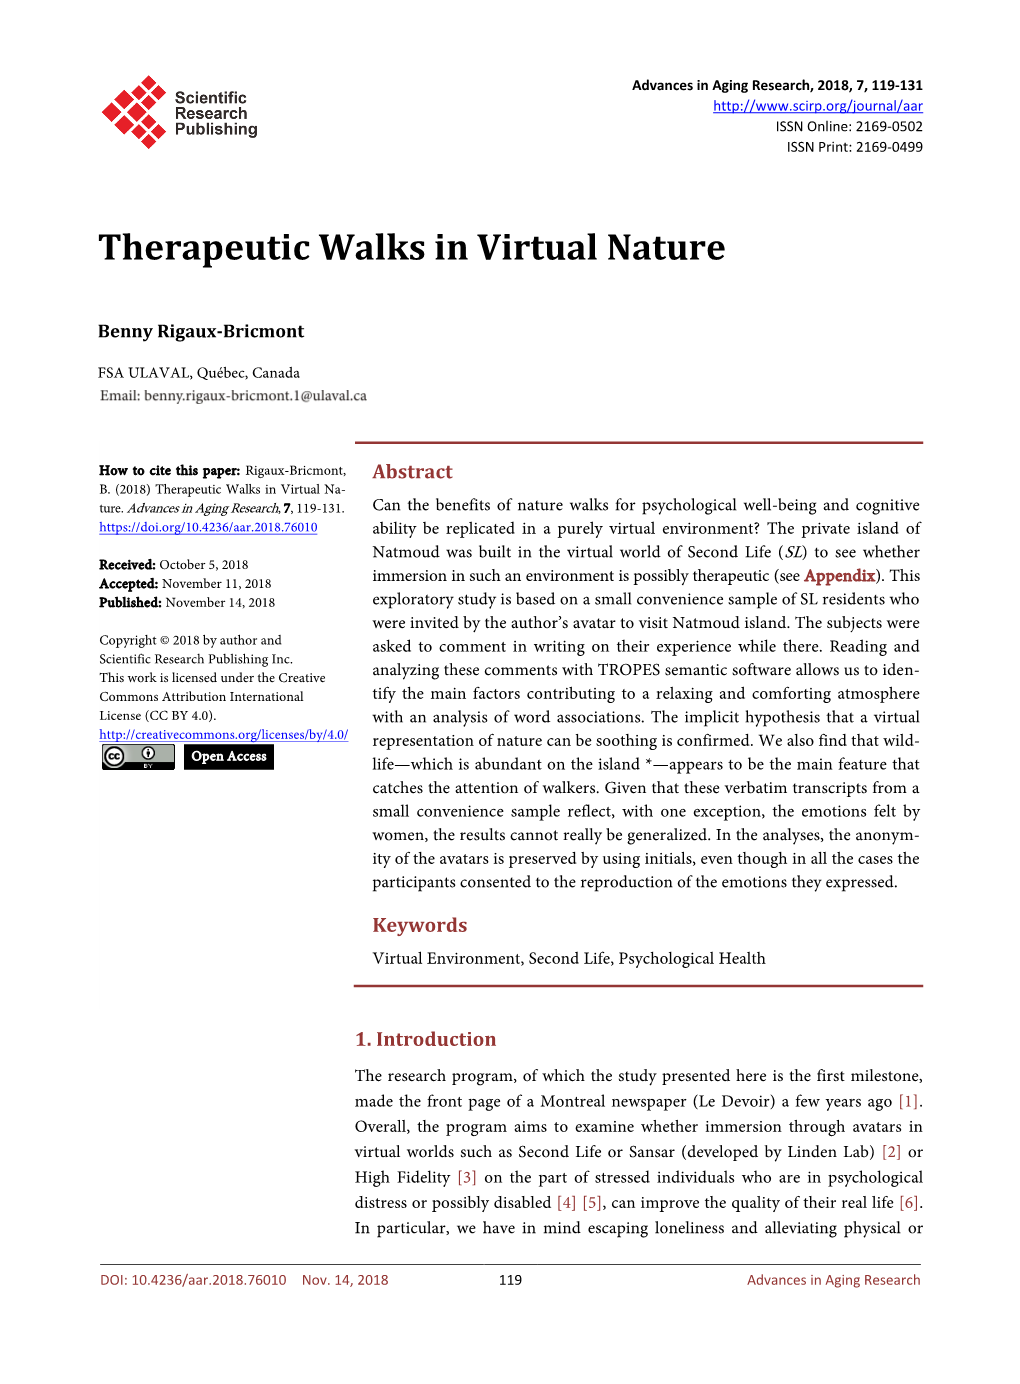 Therapeutic Walks in Virtual Nature